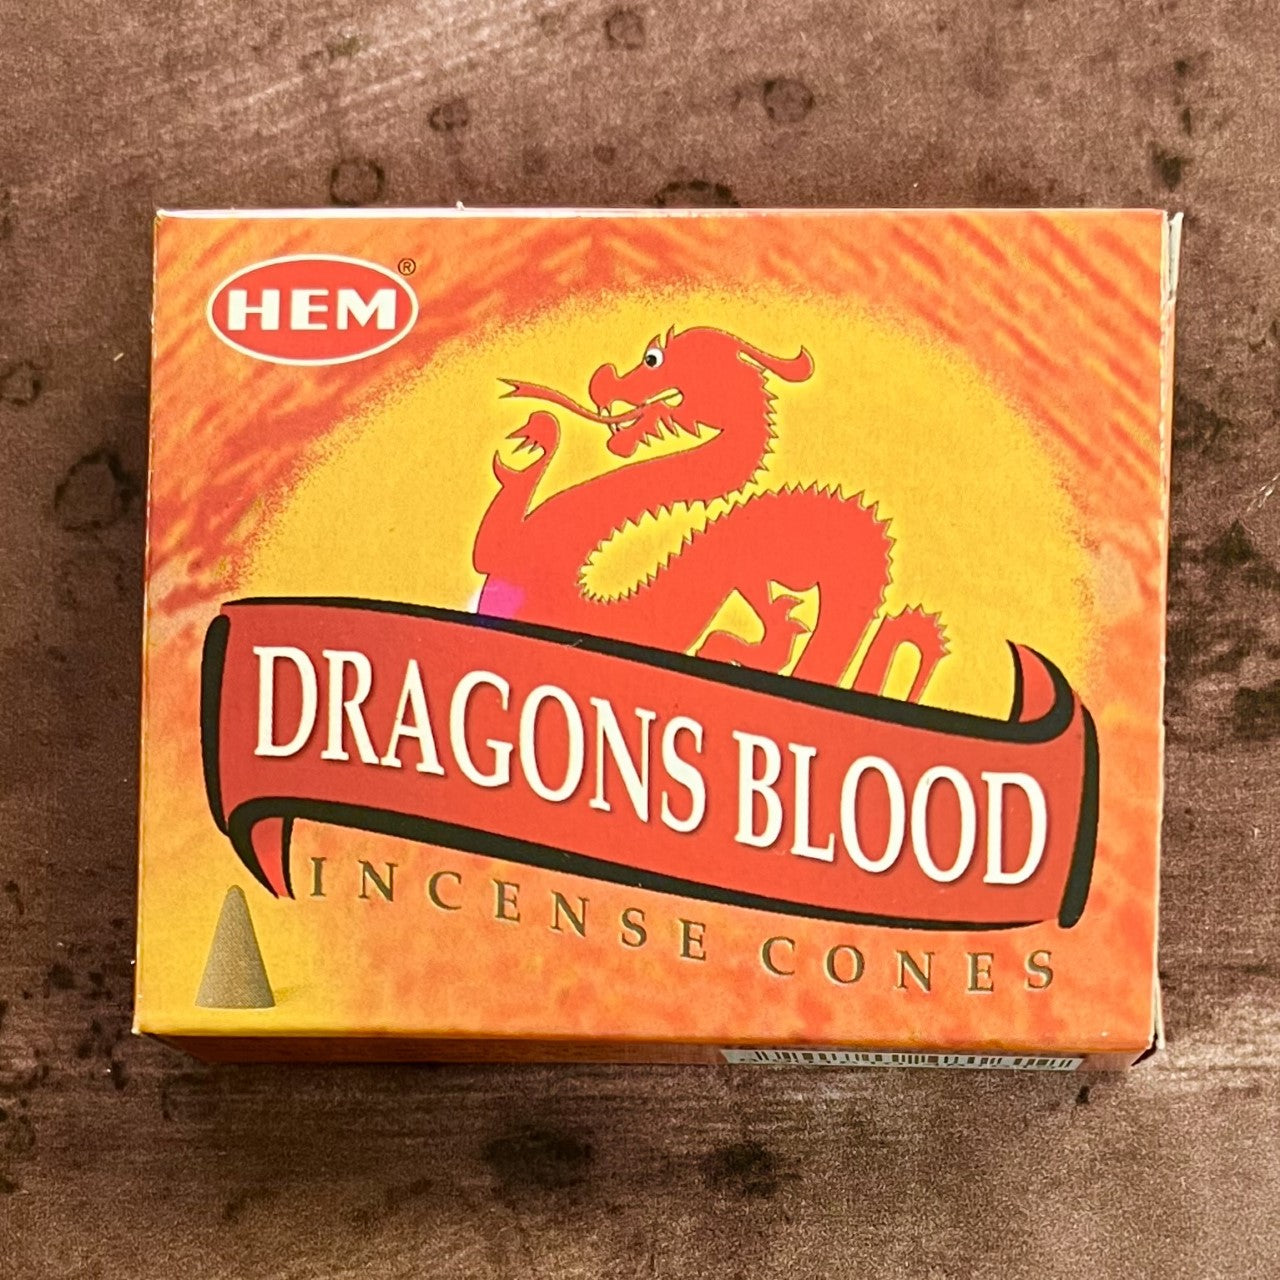 Hem Dragons Blood Cones